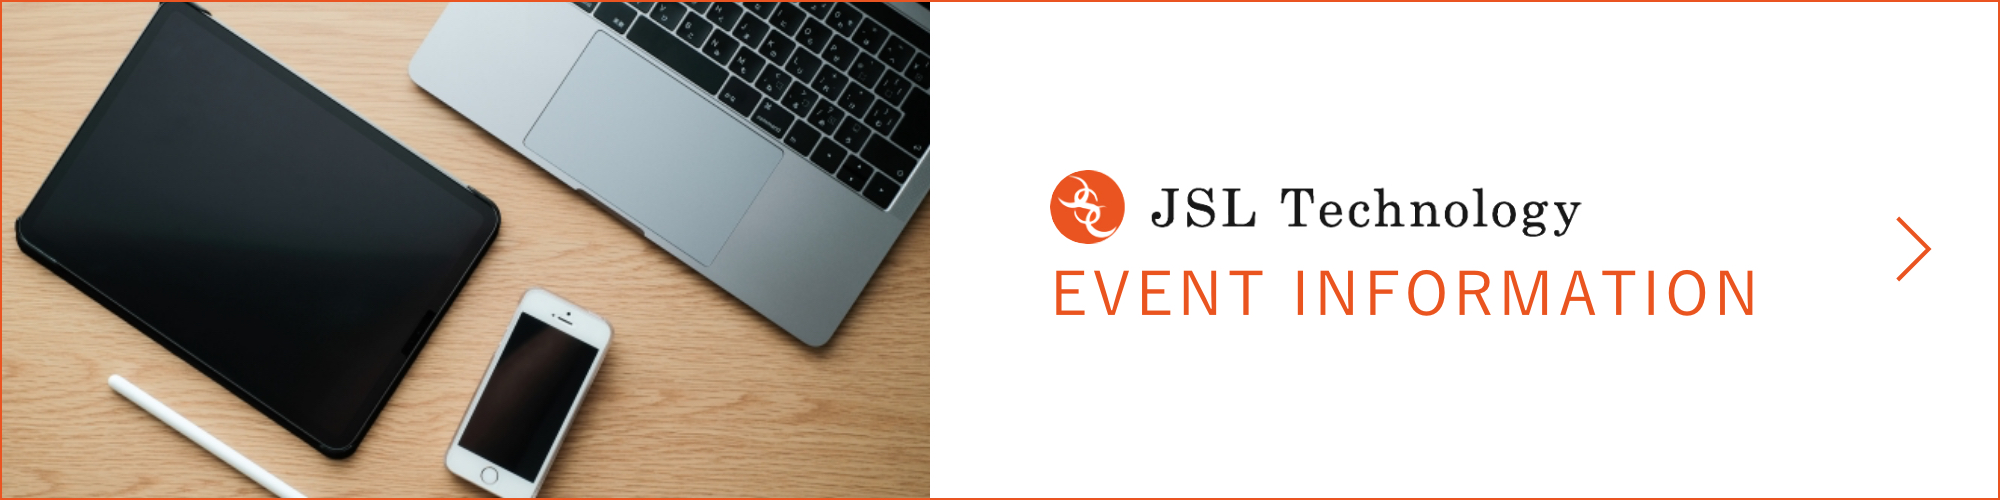 JSL Technology EVENT INFORMATION